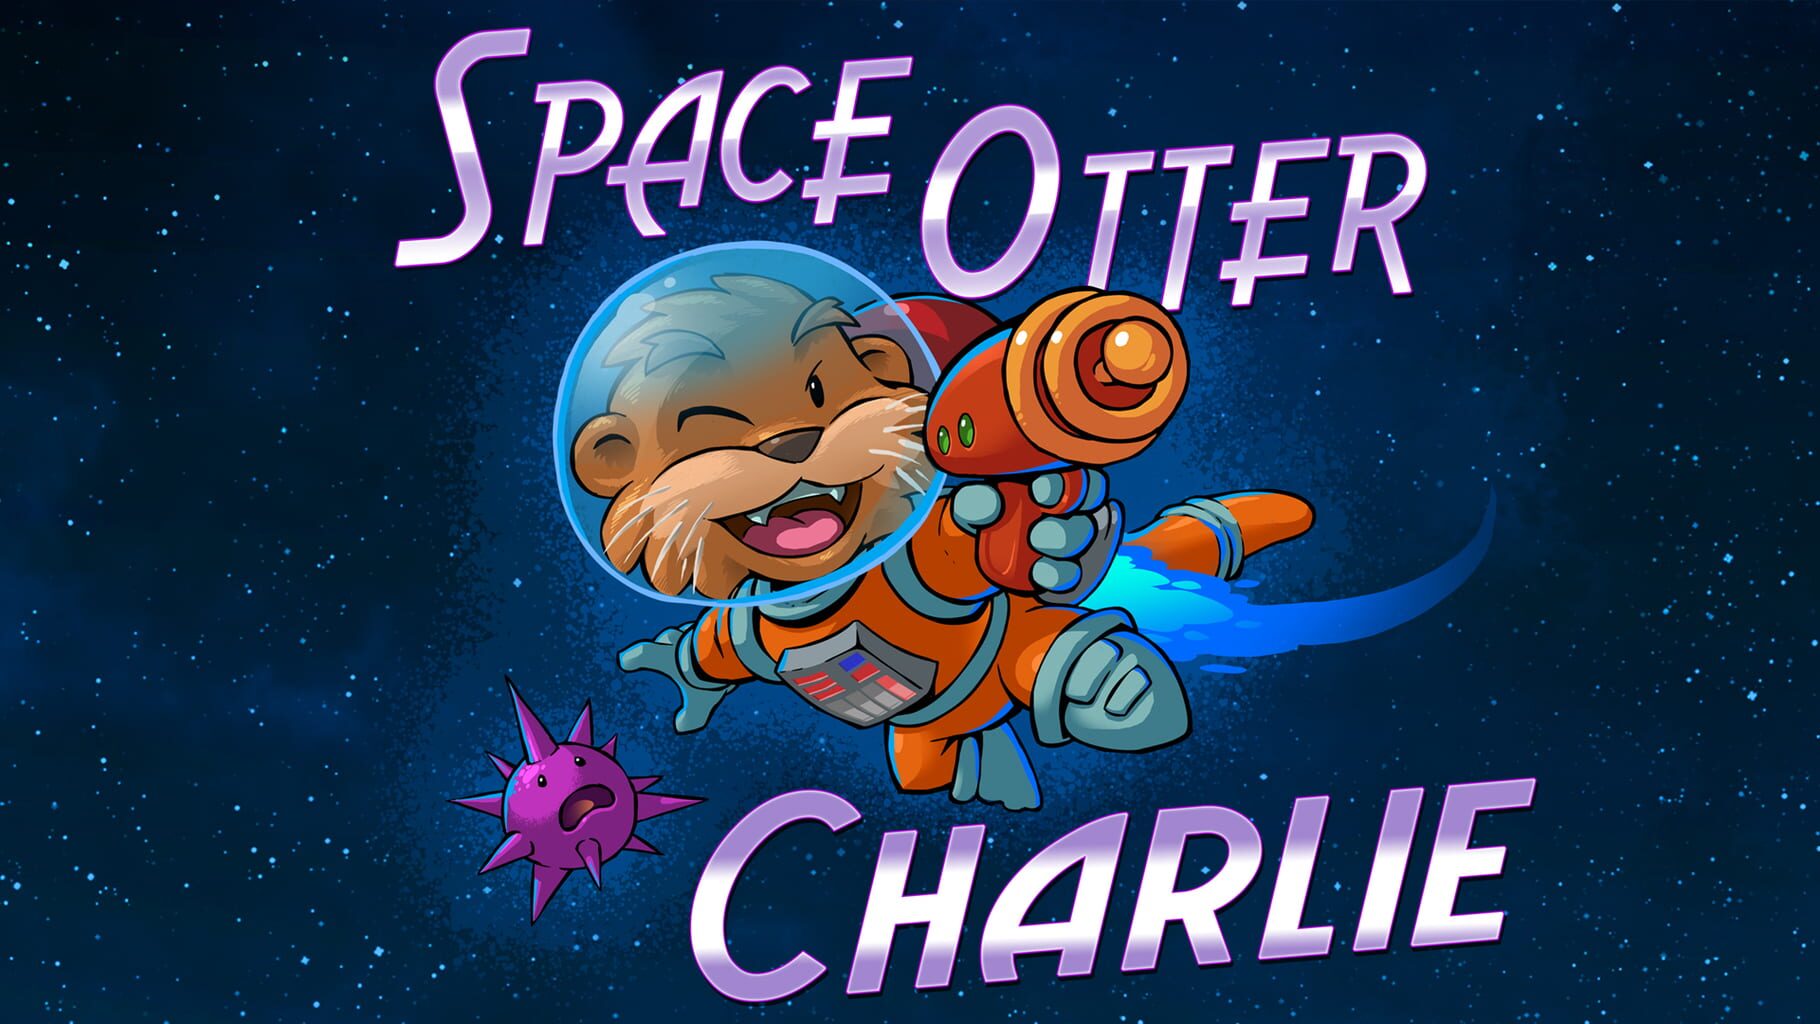 Space Otter Charlie artwork